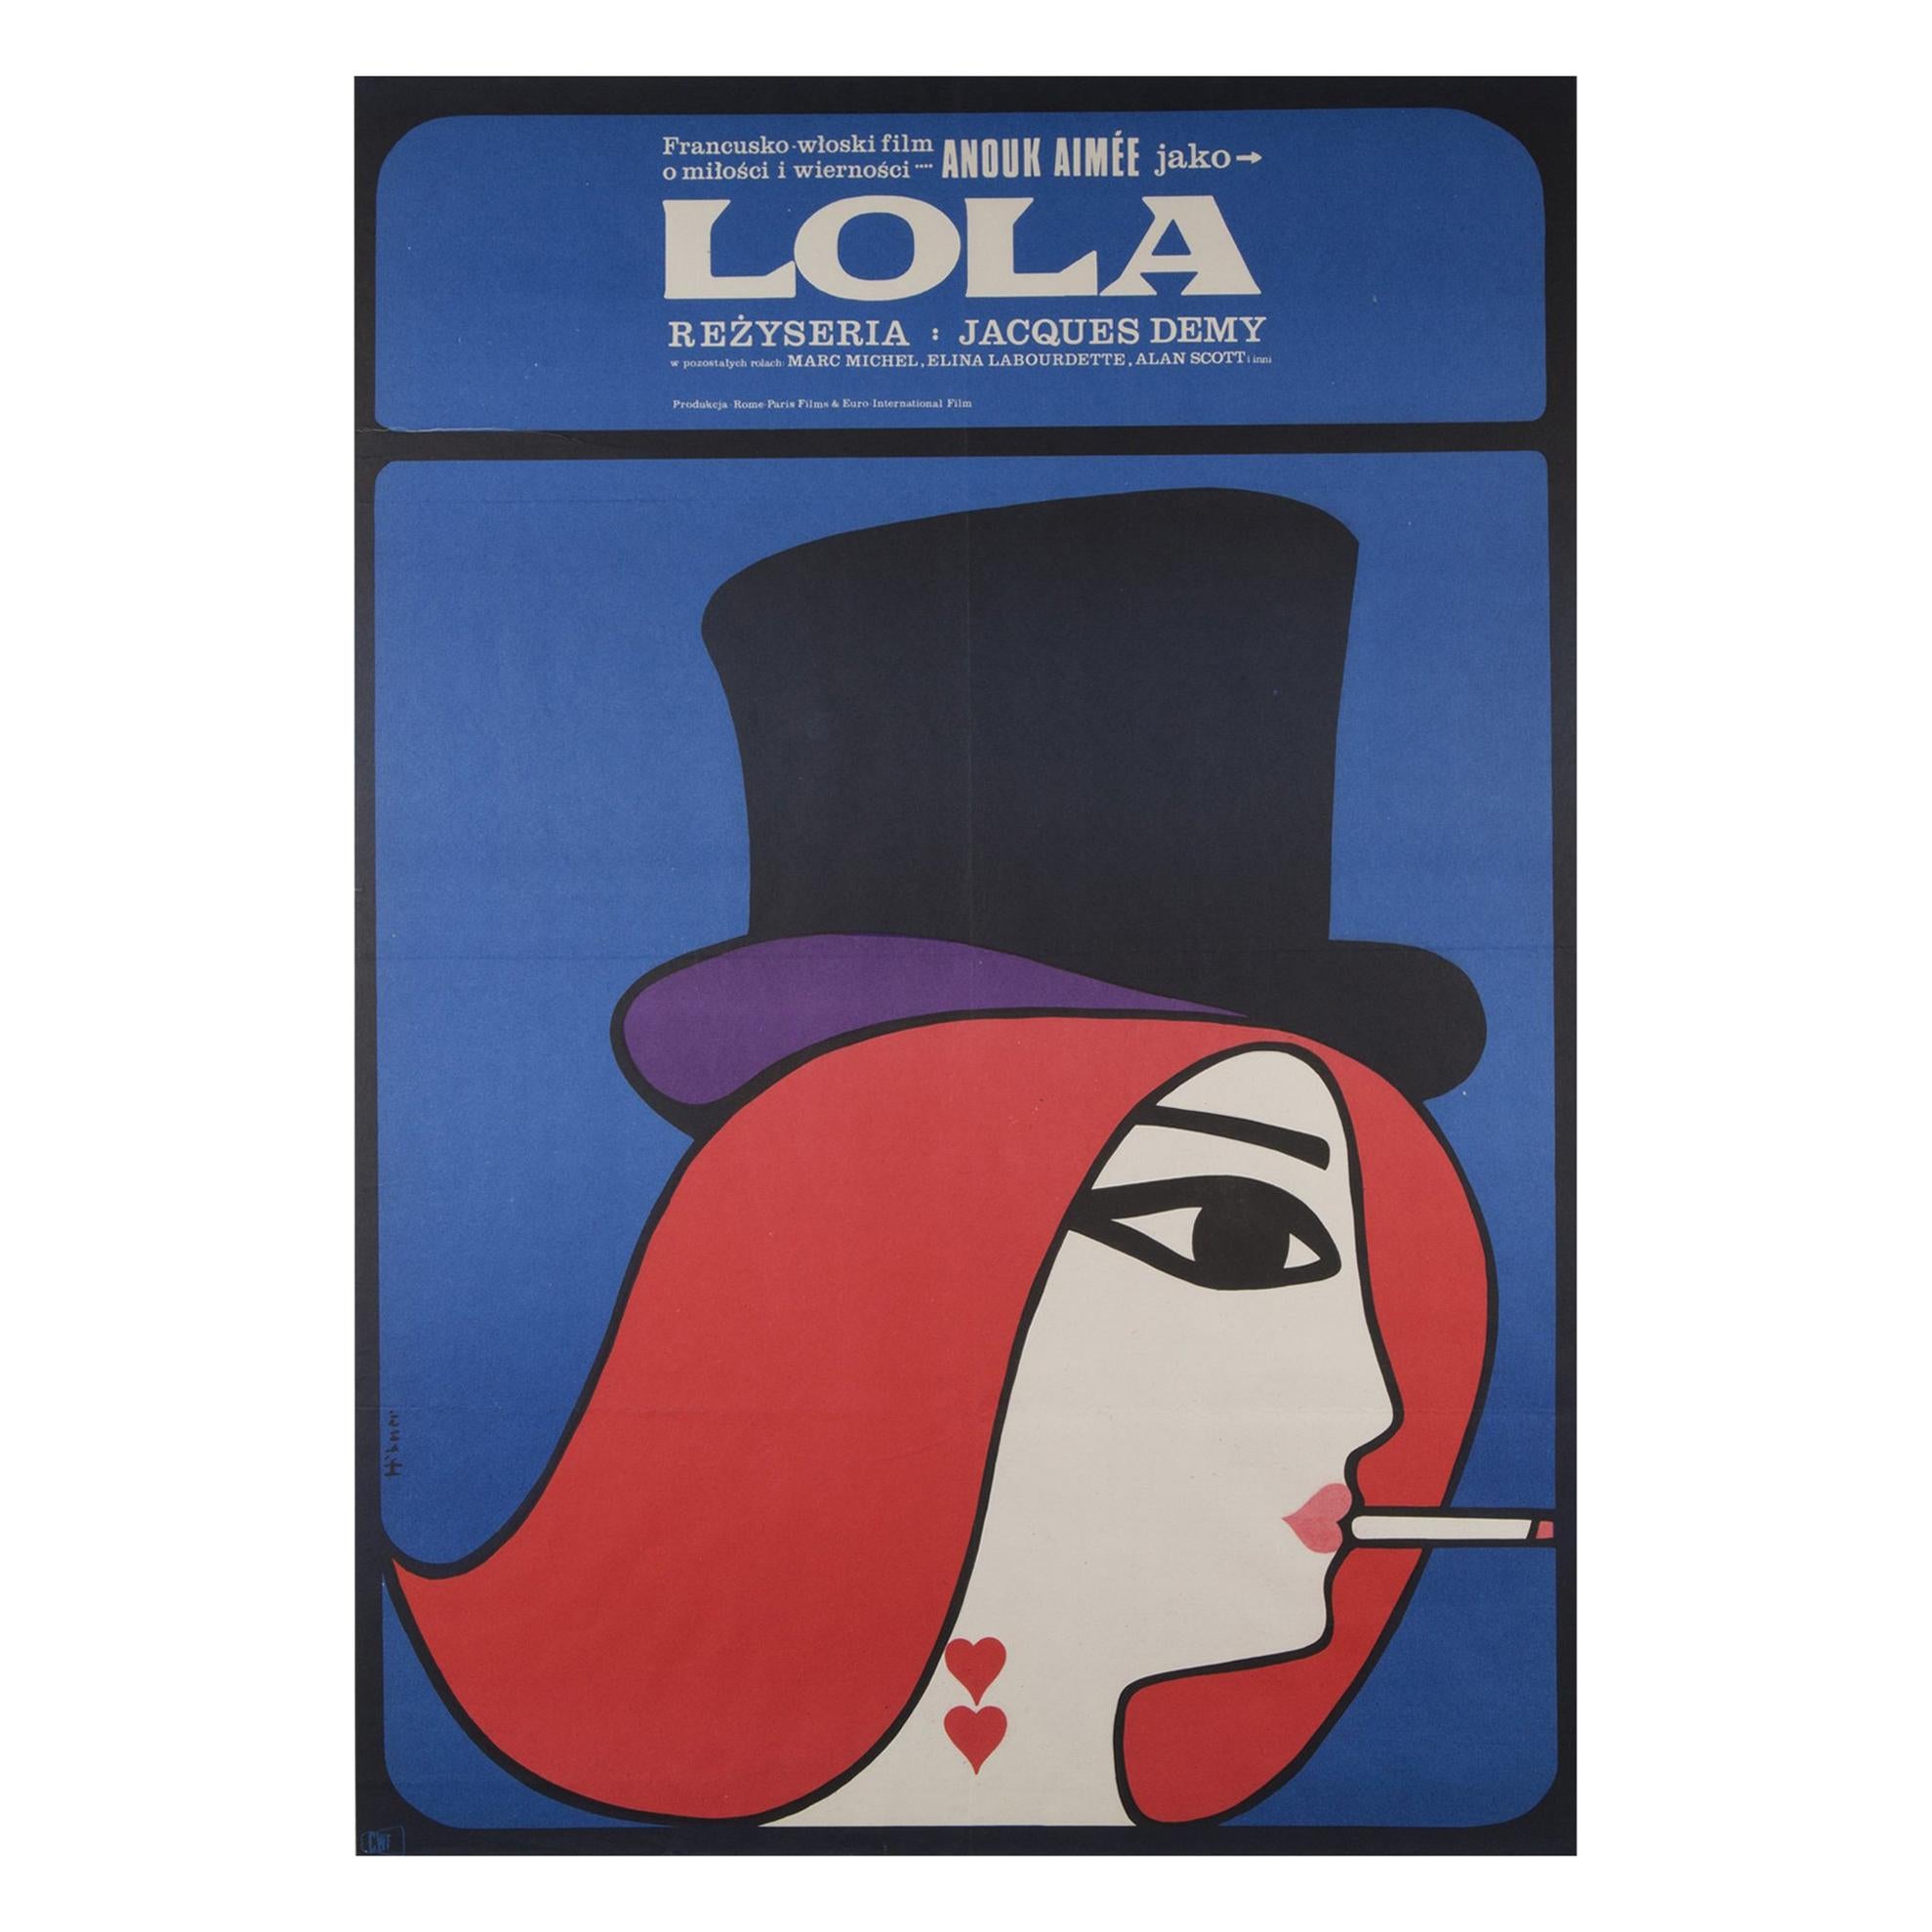 Lola Original Polish Film Poster, Maciej Hibner, 1967